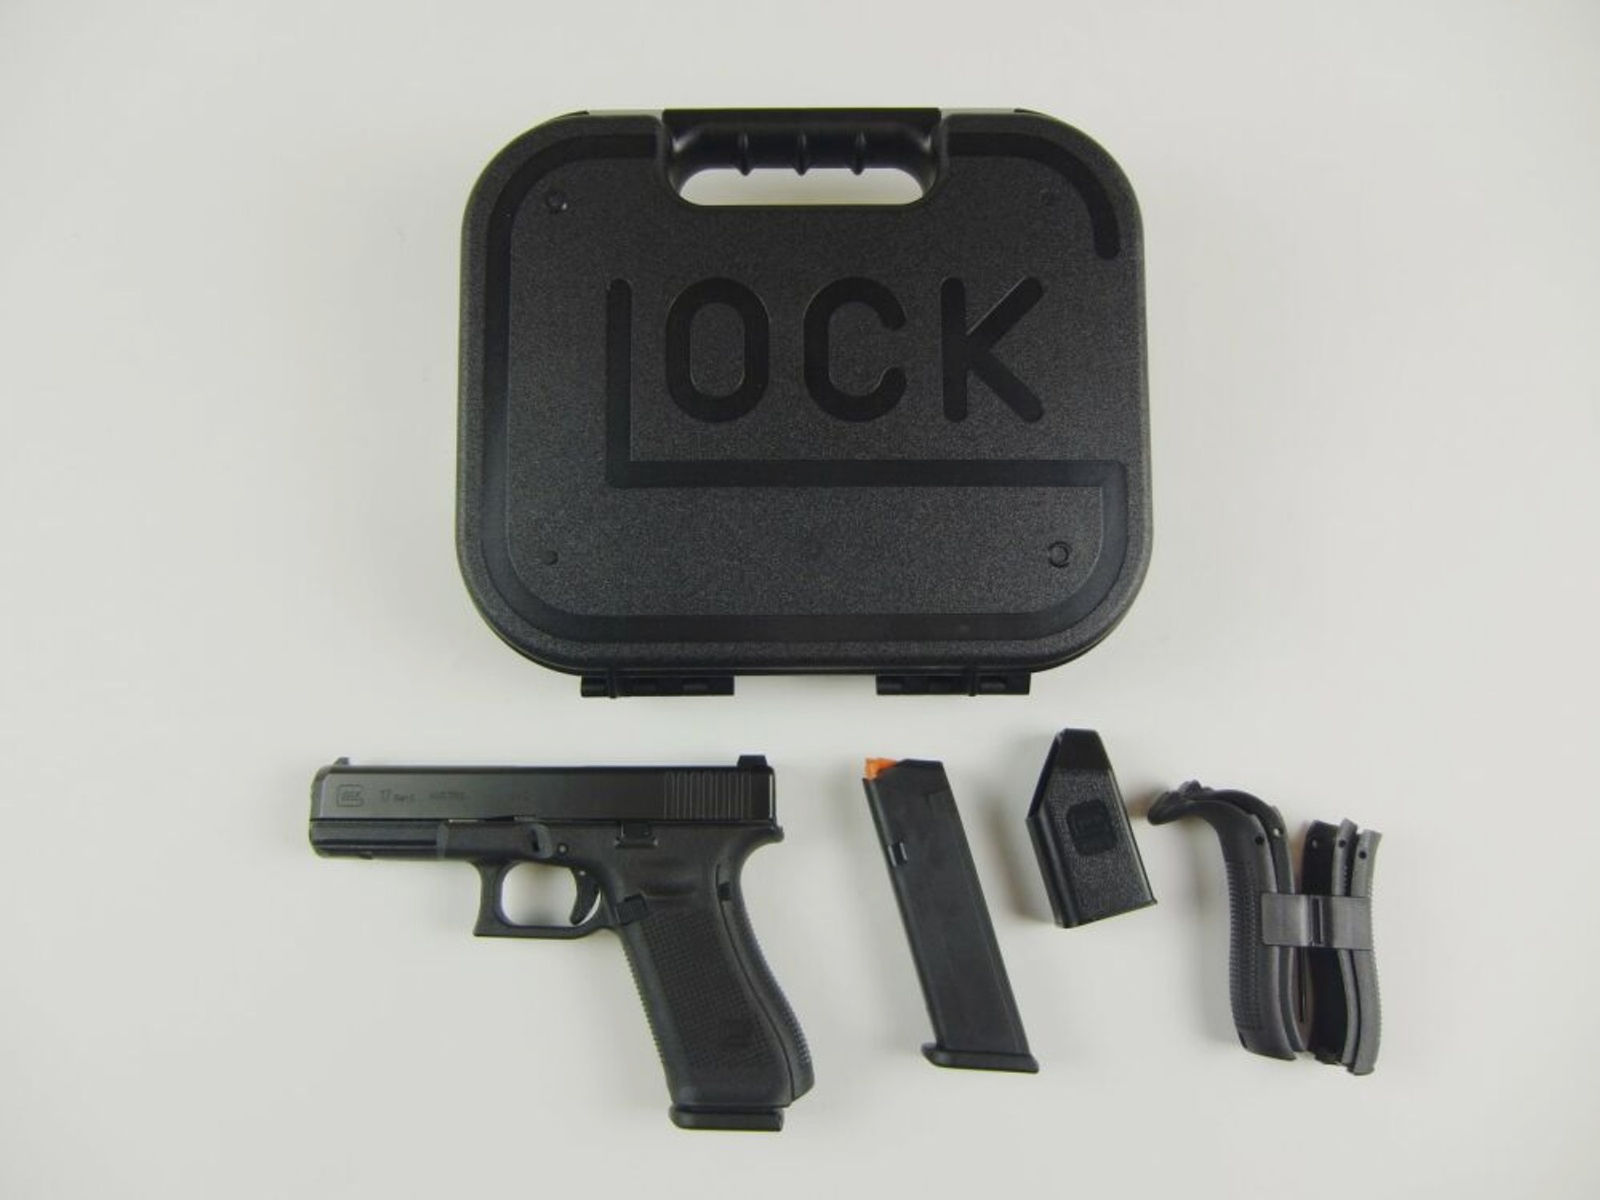 Glock	 Glock 17 Generation 5, Kaliber 9x19